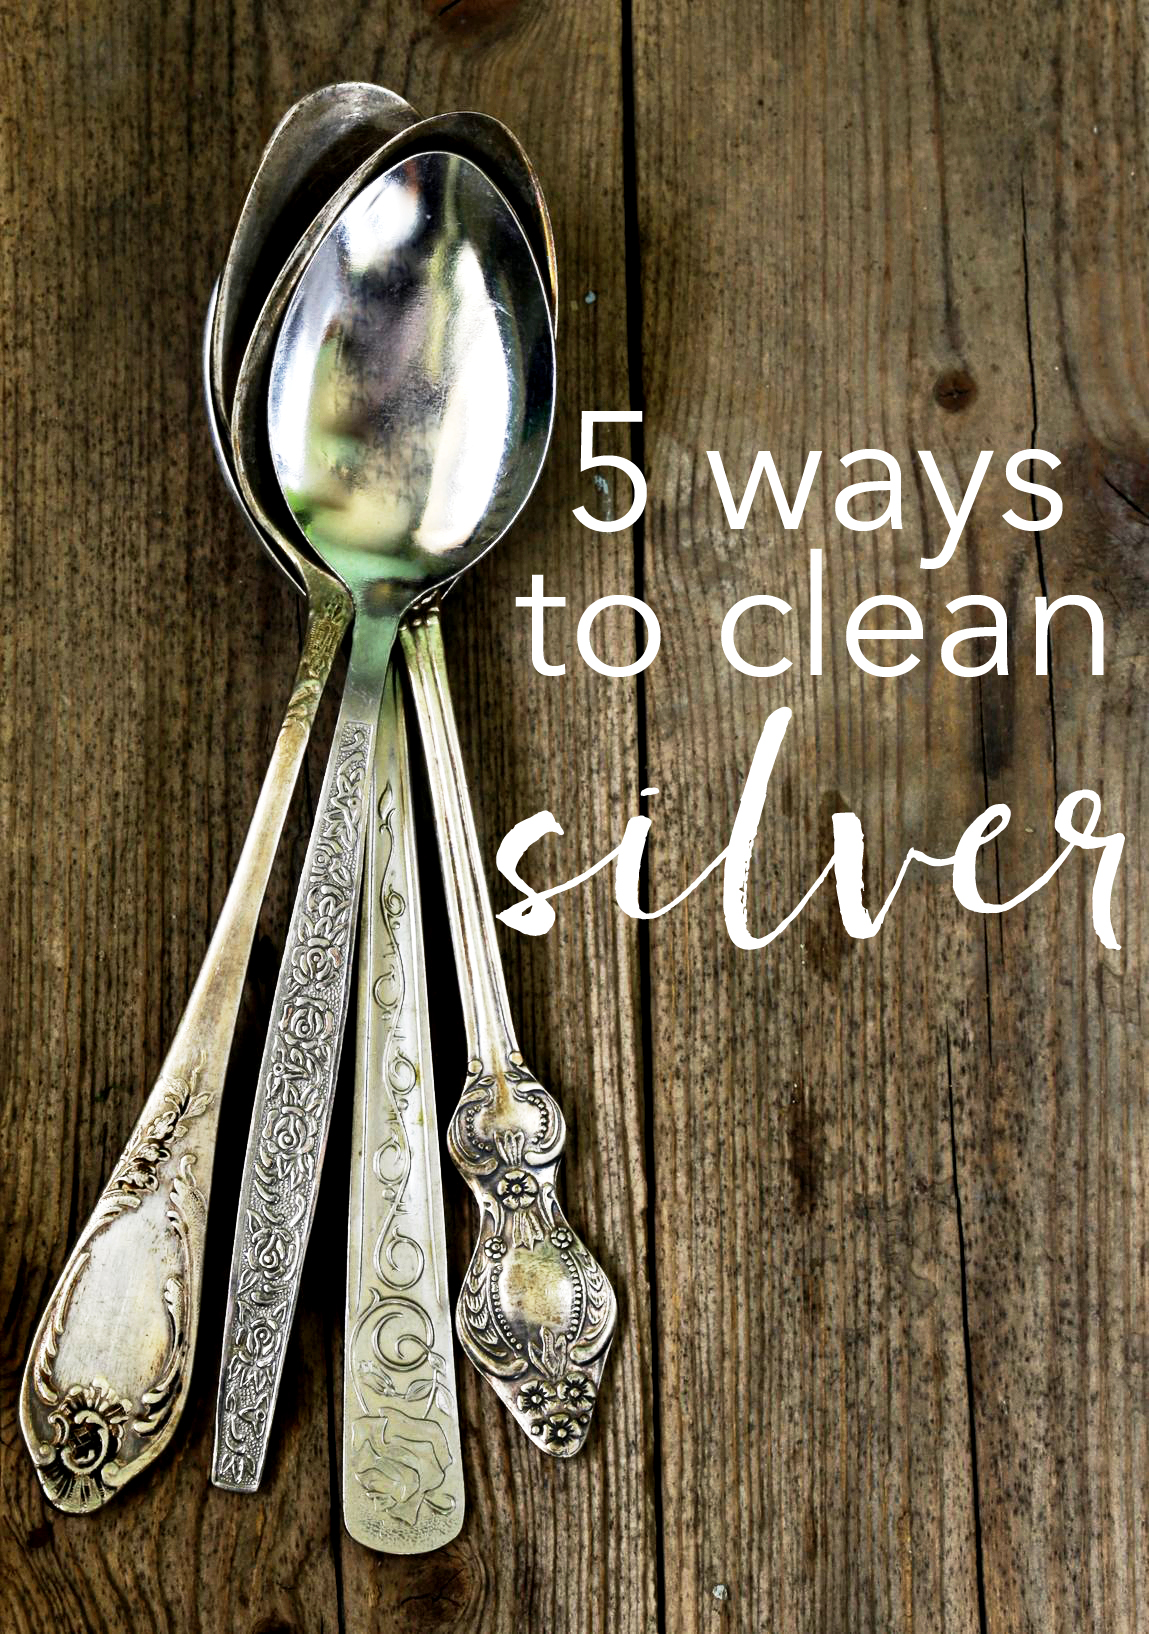 Clean Silver: DIY Tarnish Removal